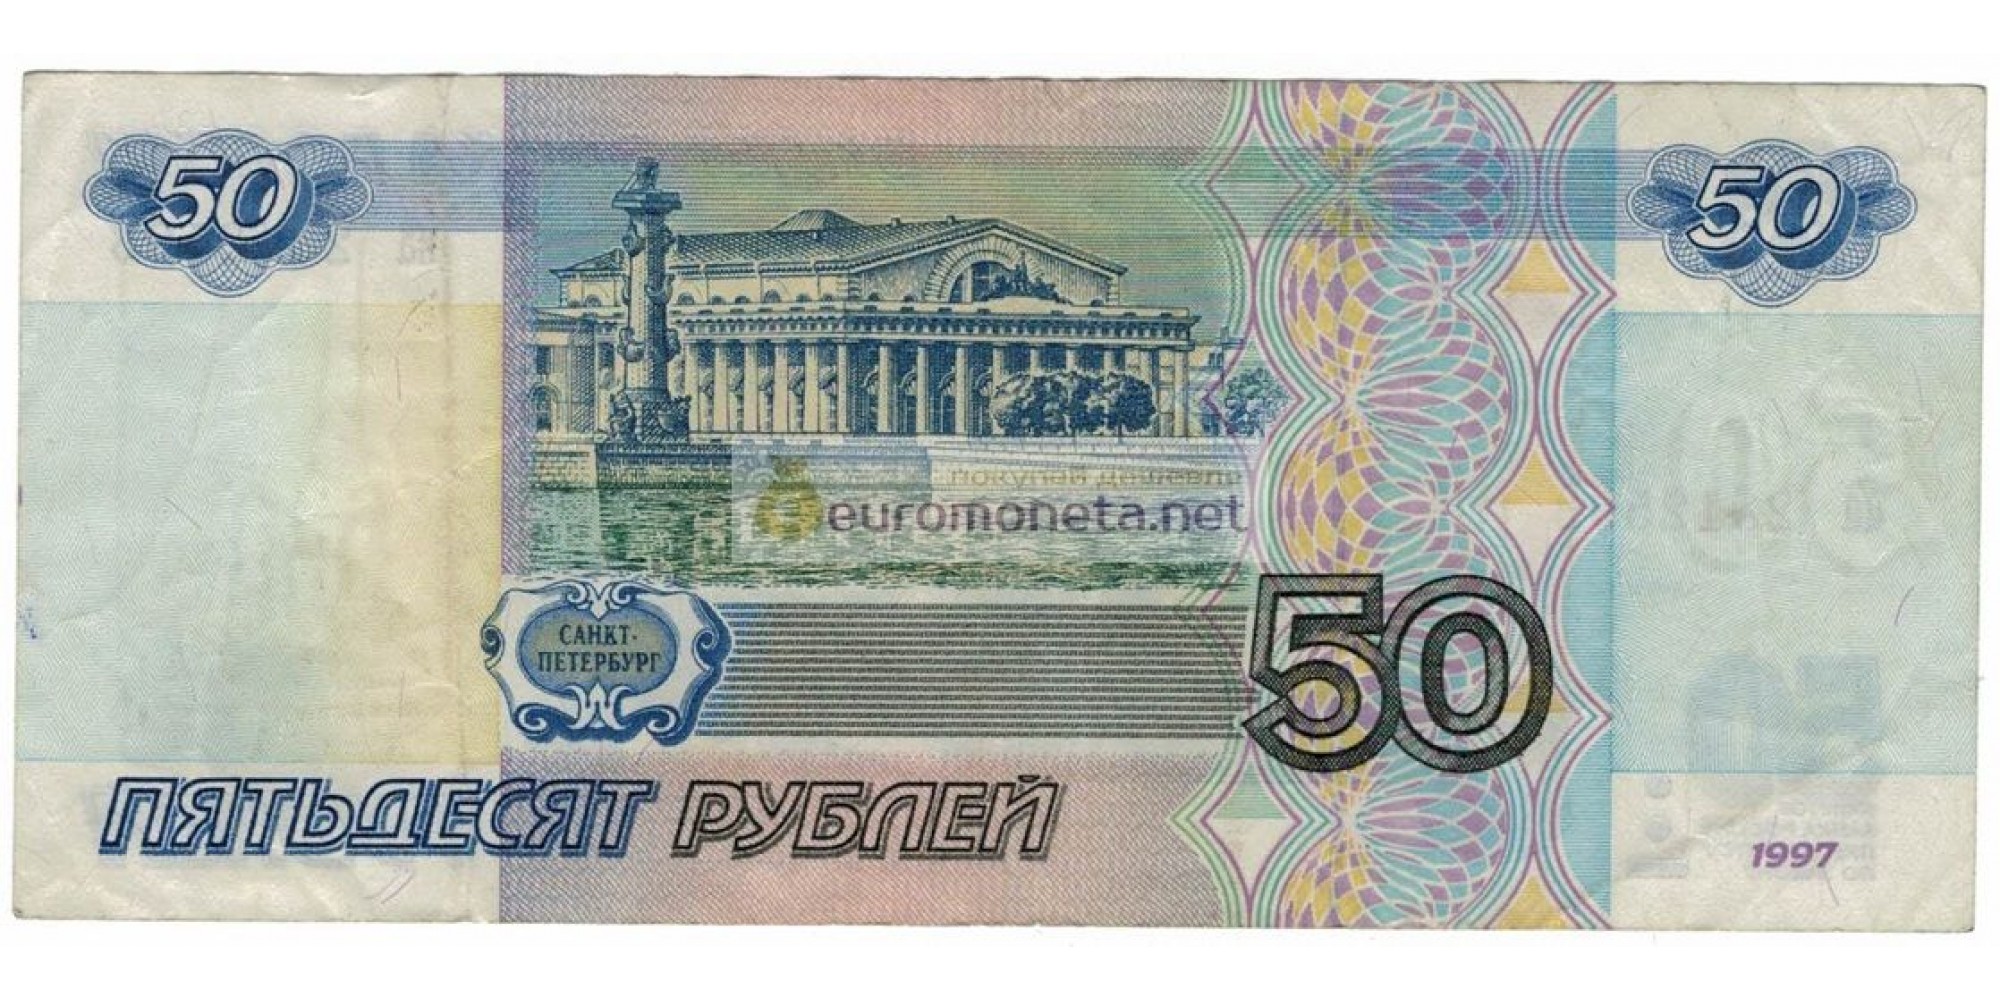 50 рублей на steam фото 99